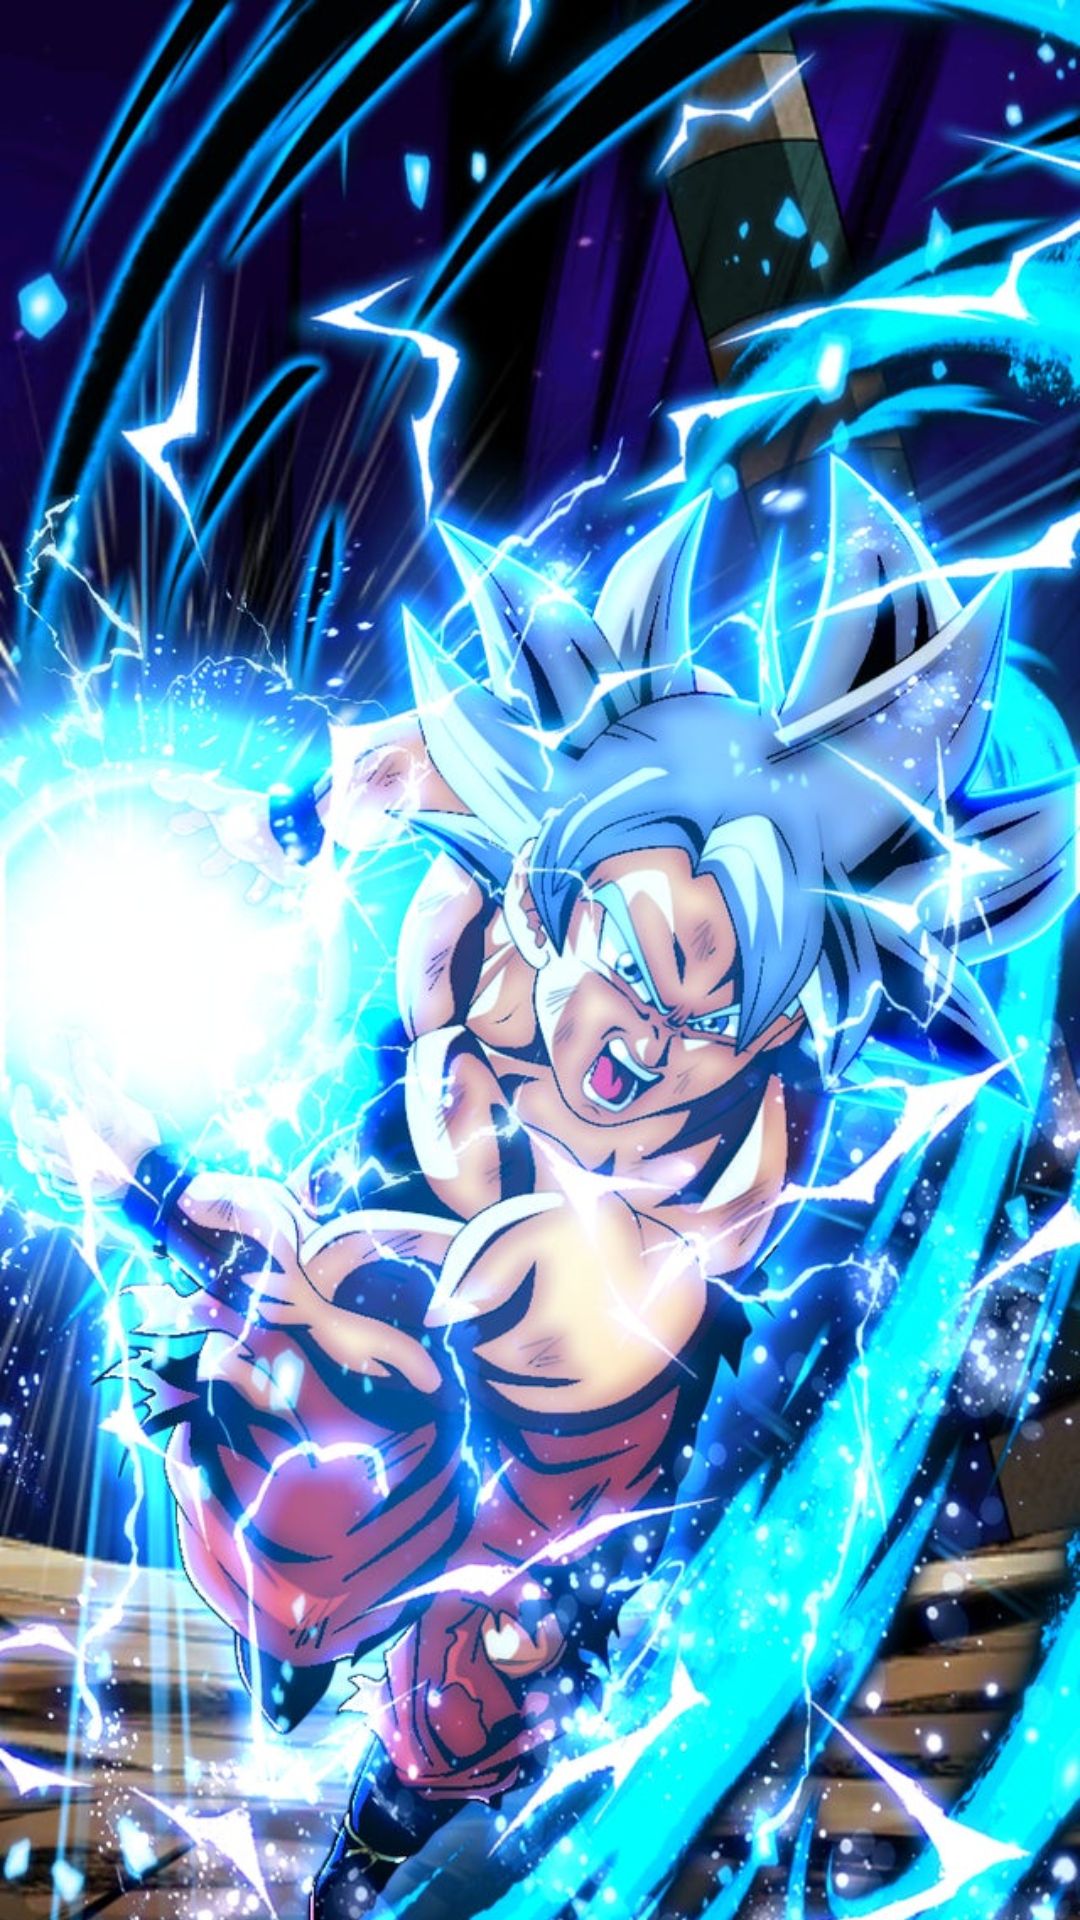 Goku Ultra instinct Wallpapers   Top 25 Best Goku Ultra instinct